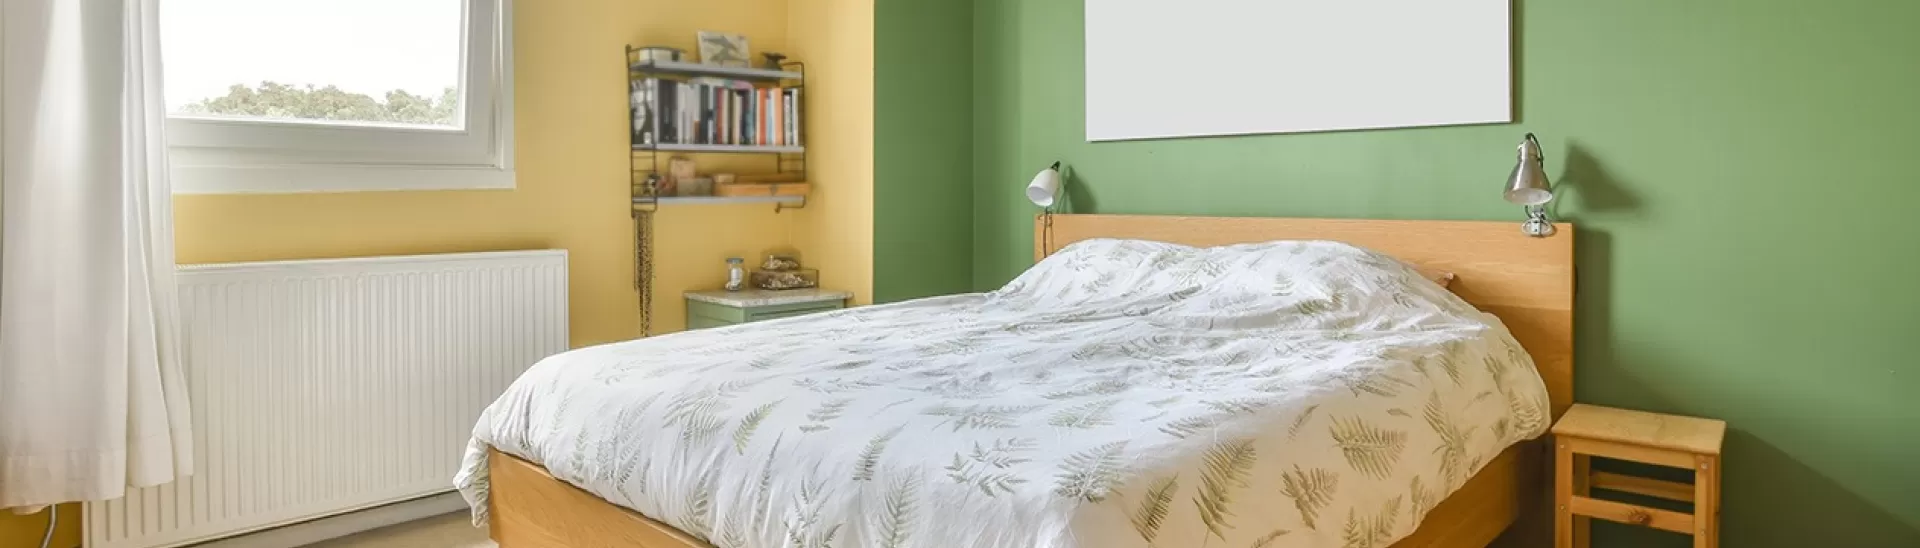 20 Bedroom Paint Ideas for a Dreamy Boudoir - Decorilla